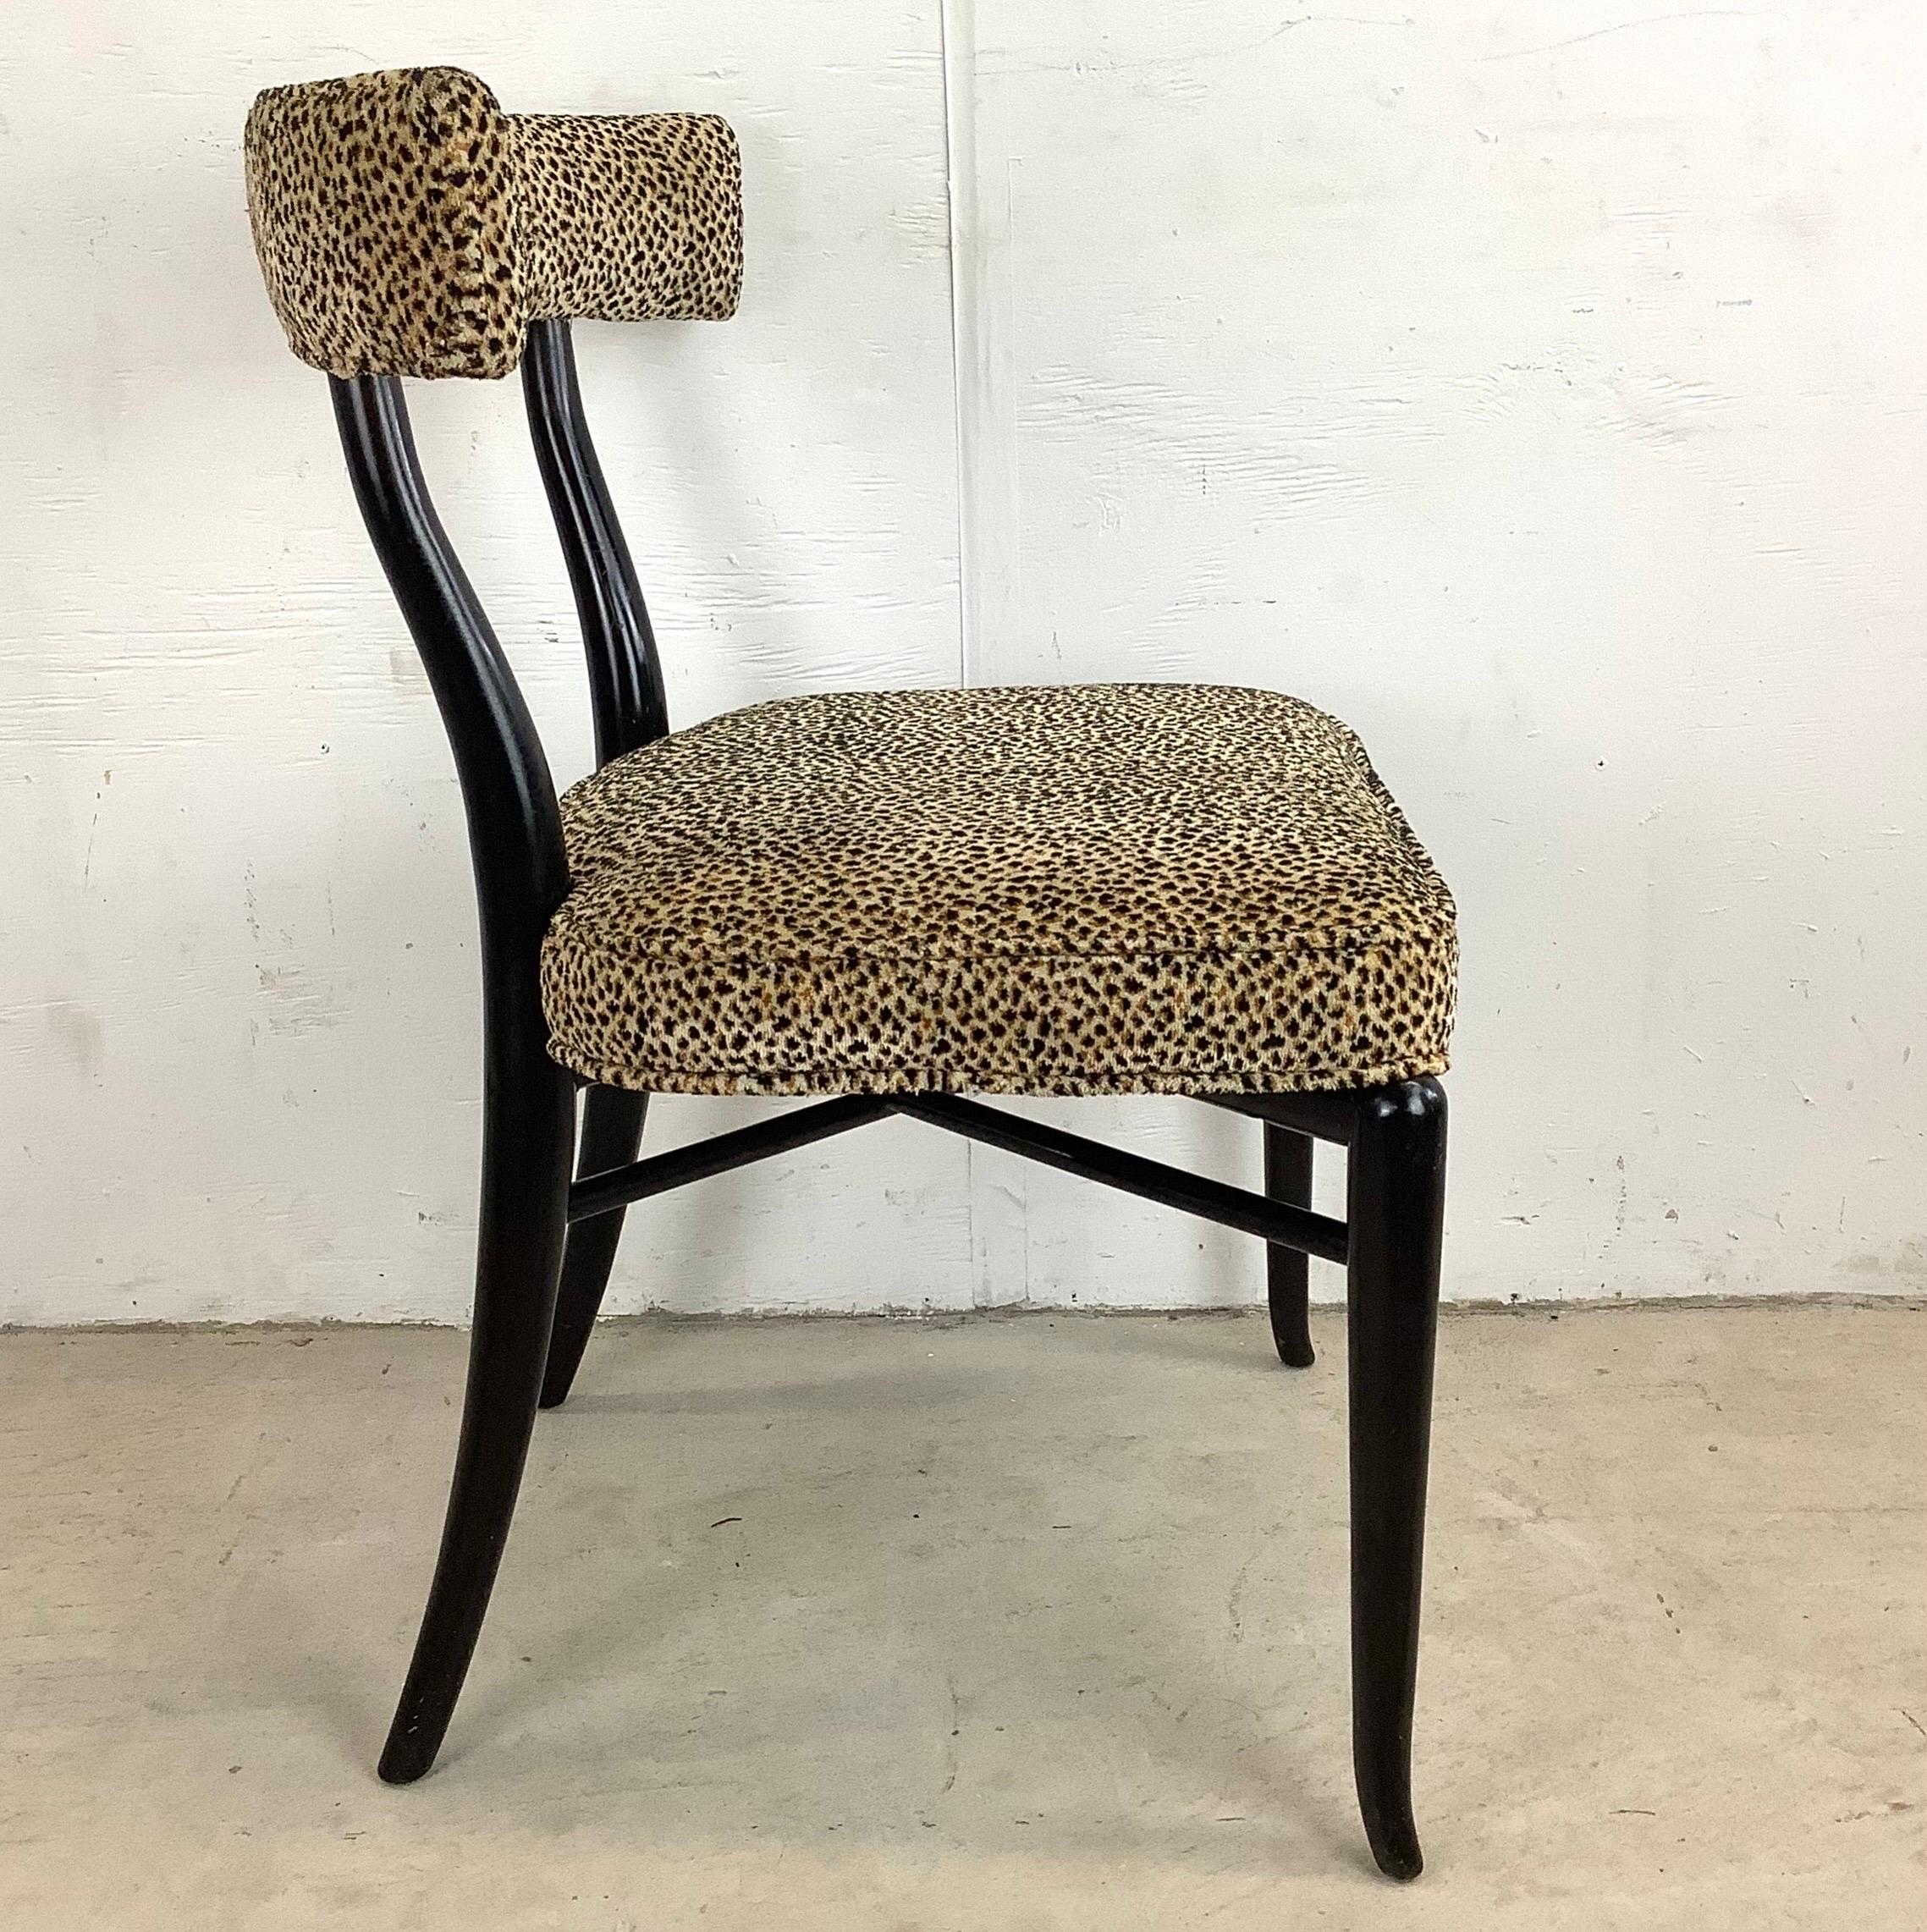 Unknown Vintage Klismos Chair in Leopard Print Attr. to t.h. Robsjohn-Gibbings